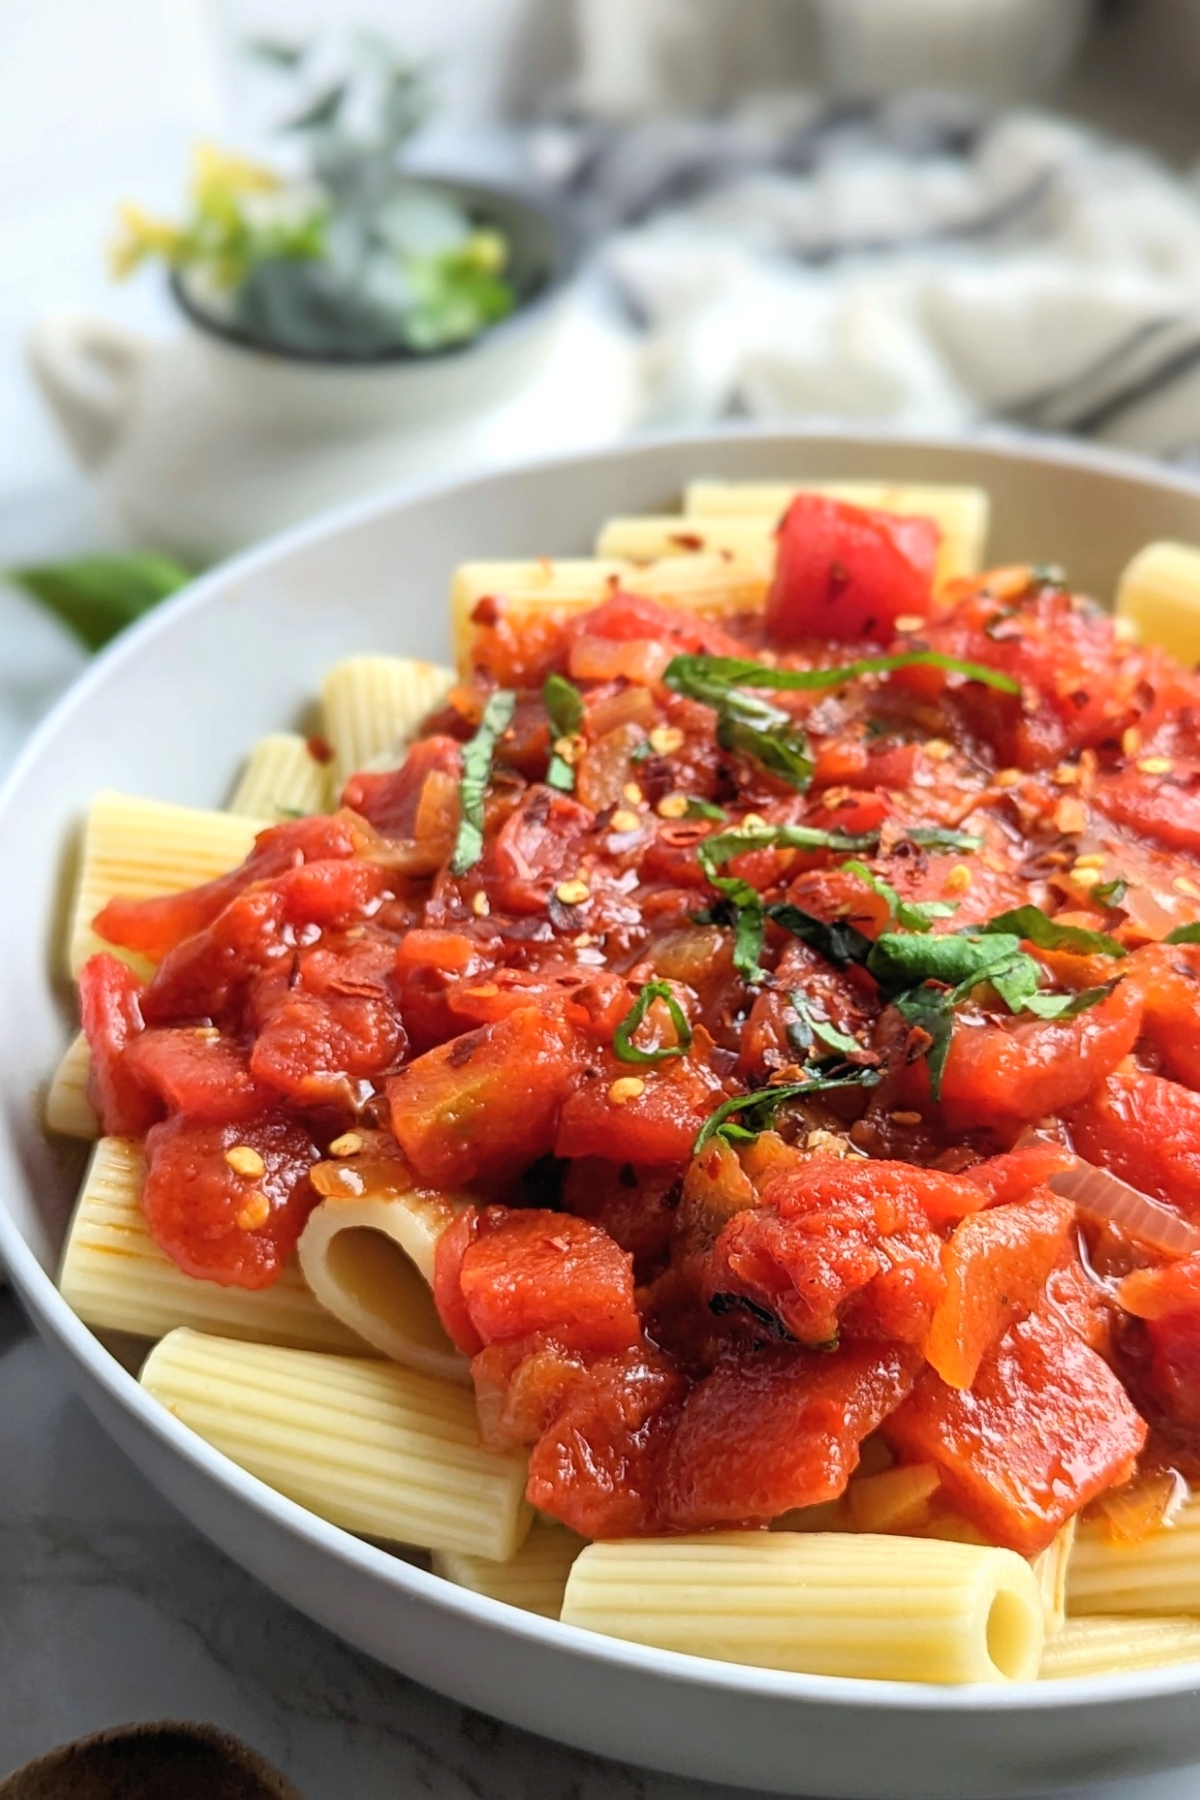 rigatoni arrabbiata pasta recipe vegan vegetarian meatless arrabbiata sauce for rigatoni noodles italian spicy sauce thick pasta